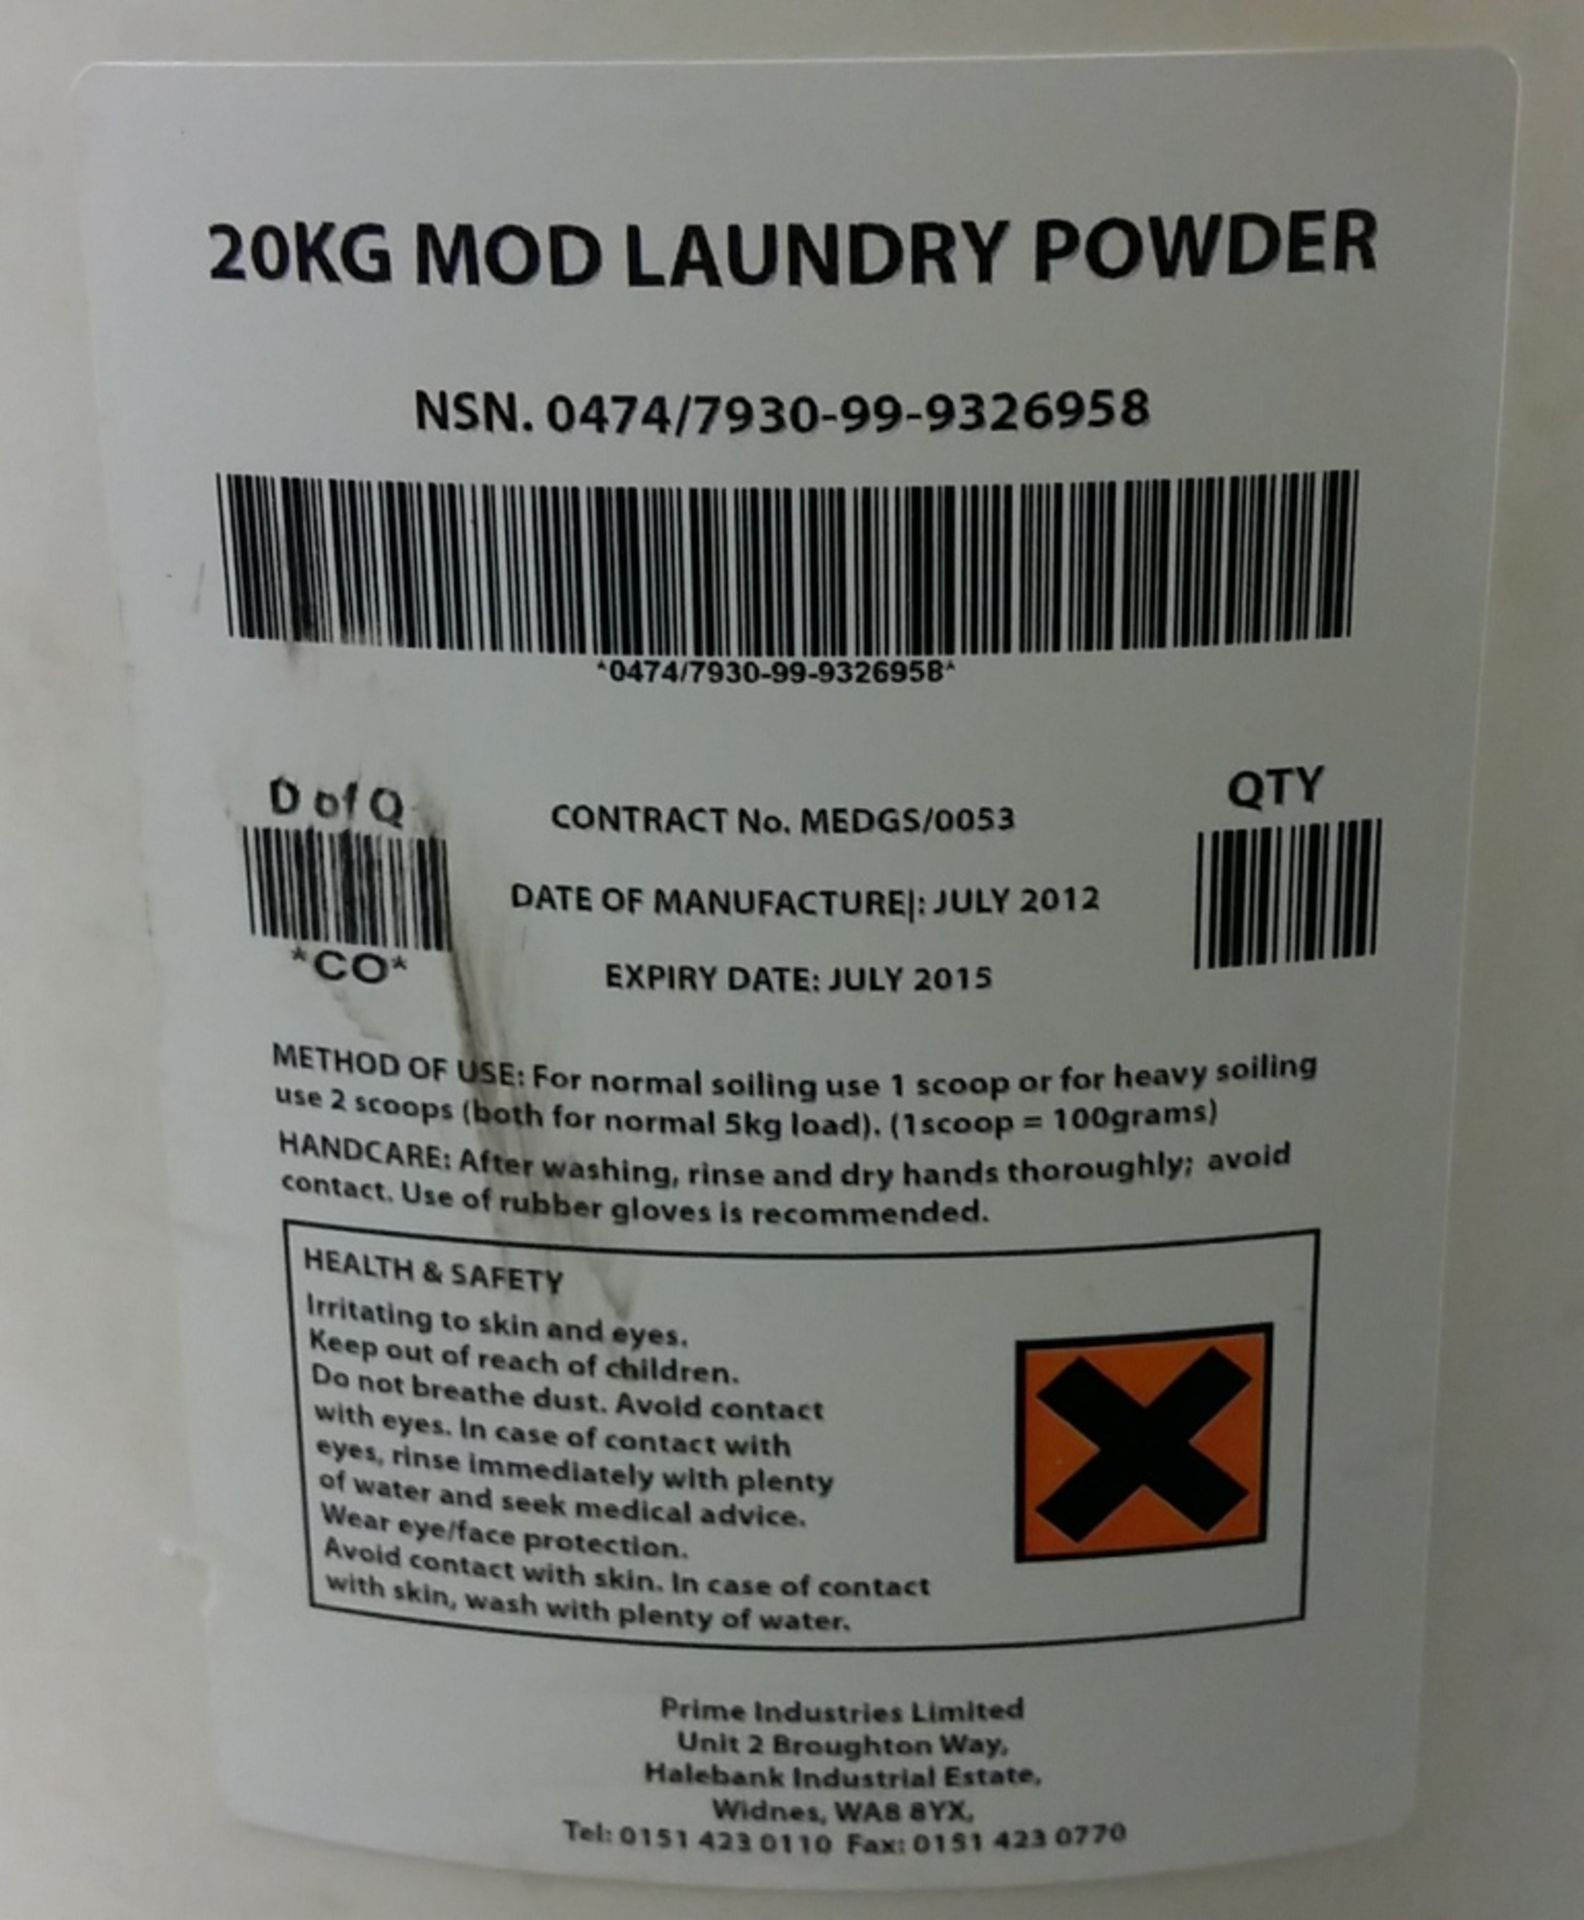 MoD laundry powder - 25kg tubs NSN 7930-99-932-6958 - 24 tubs - Image 2 of 2